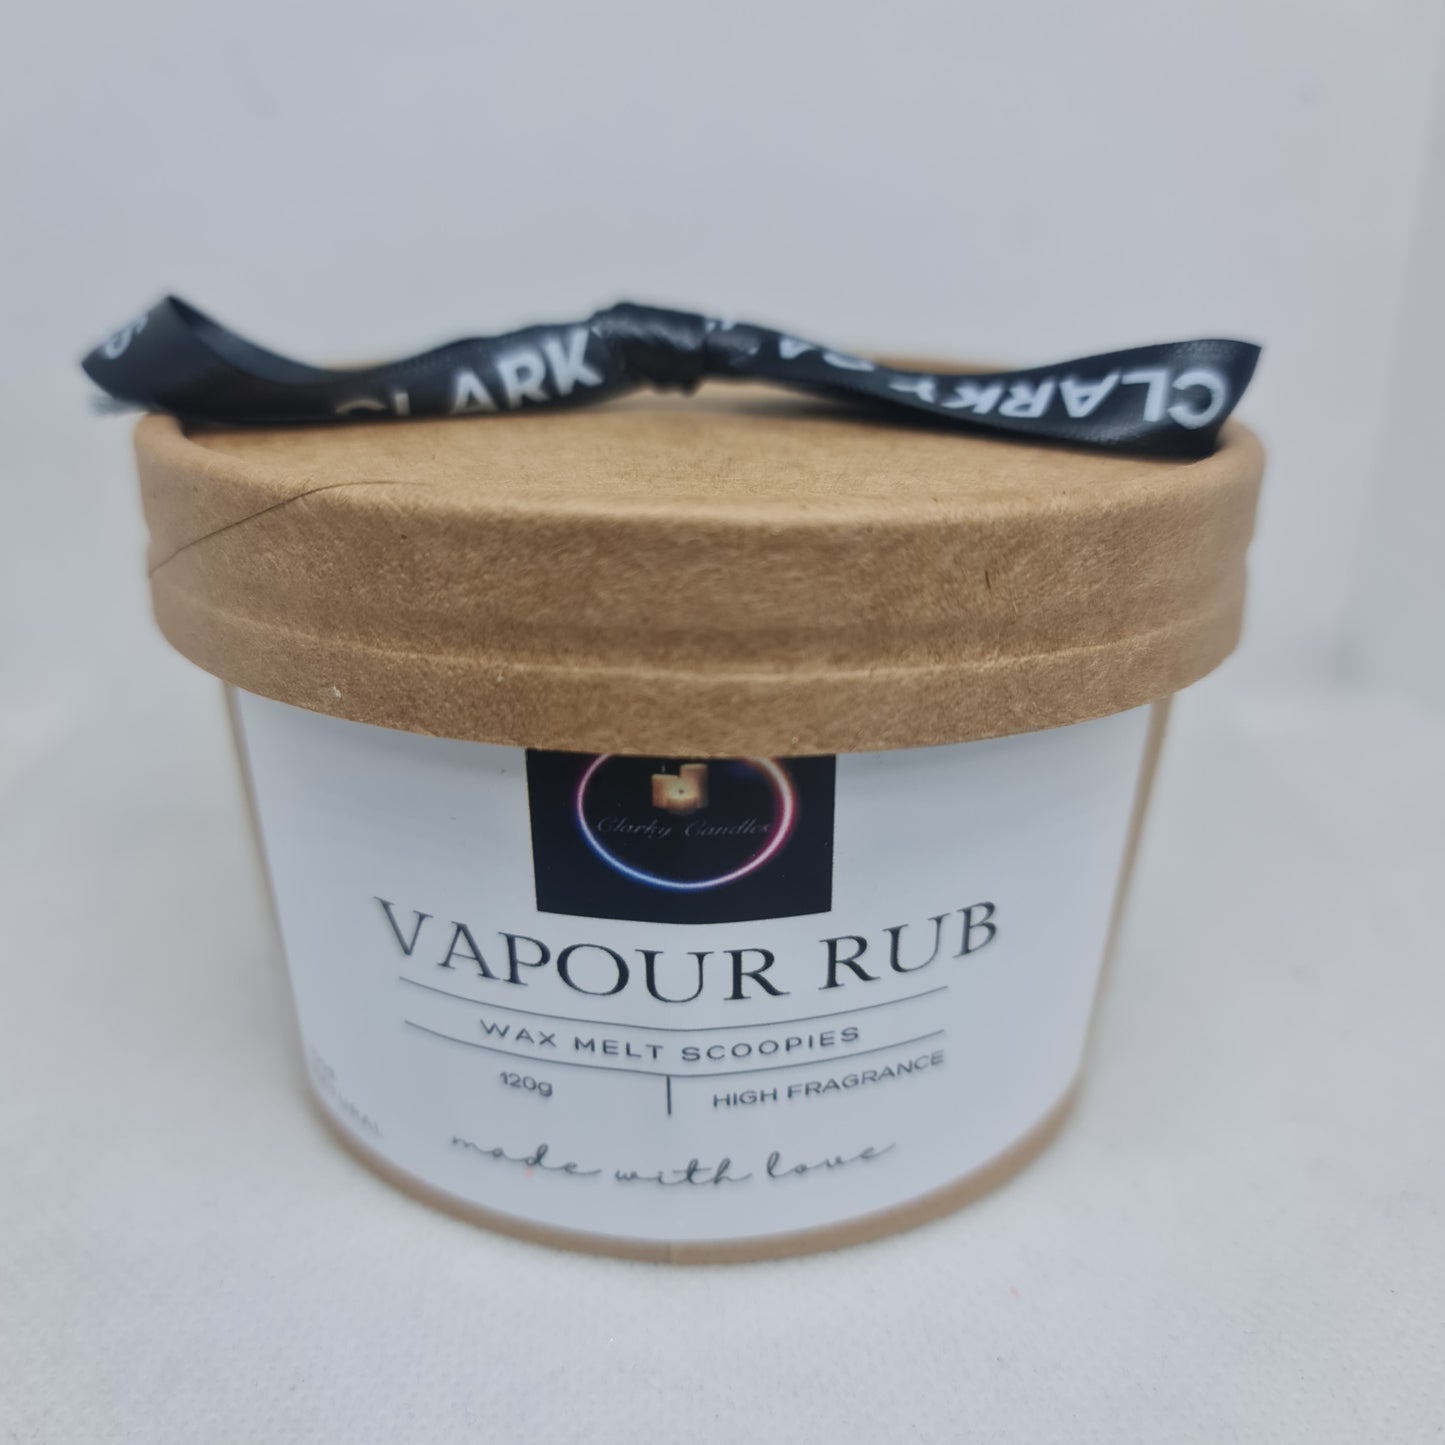 Vapour Rub - Wax Melt Scoopies - 120g